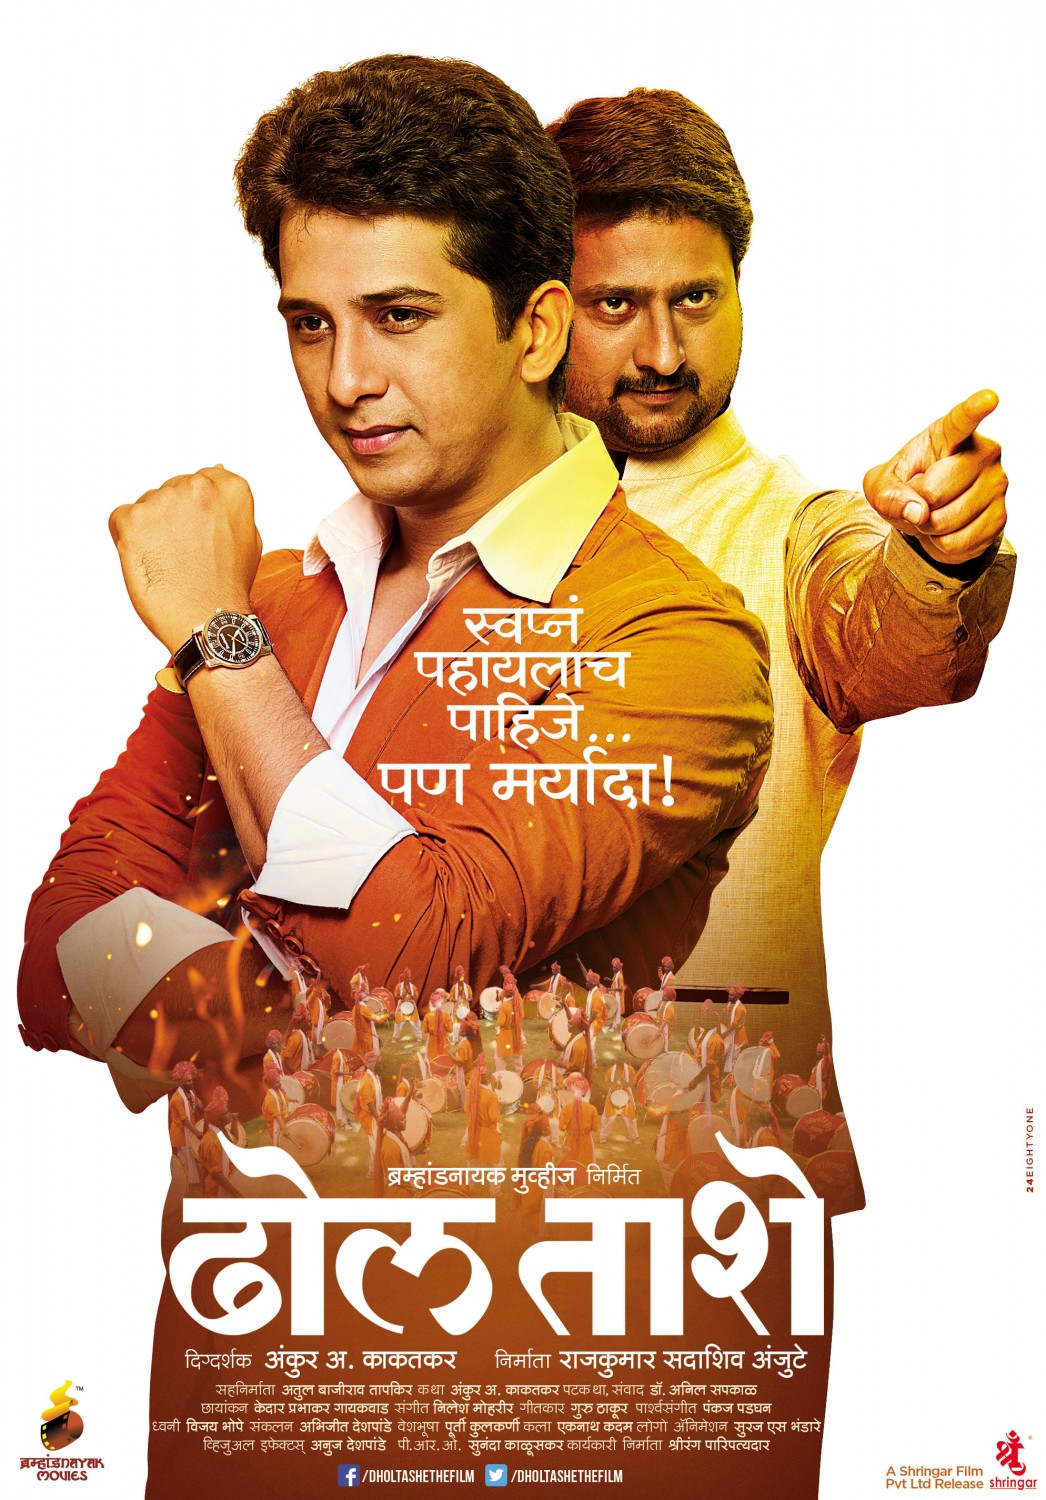 Extra Large Movie Poster Image for Dhol Tashe 